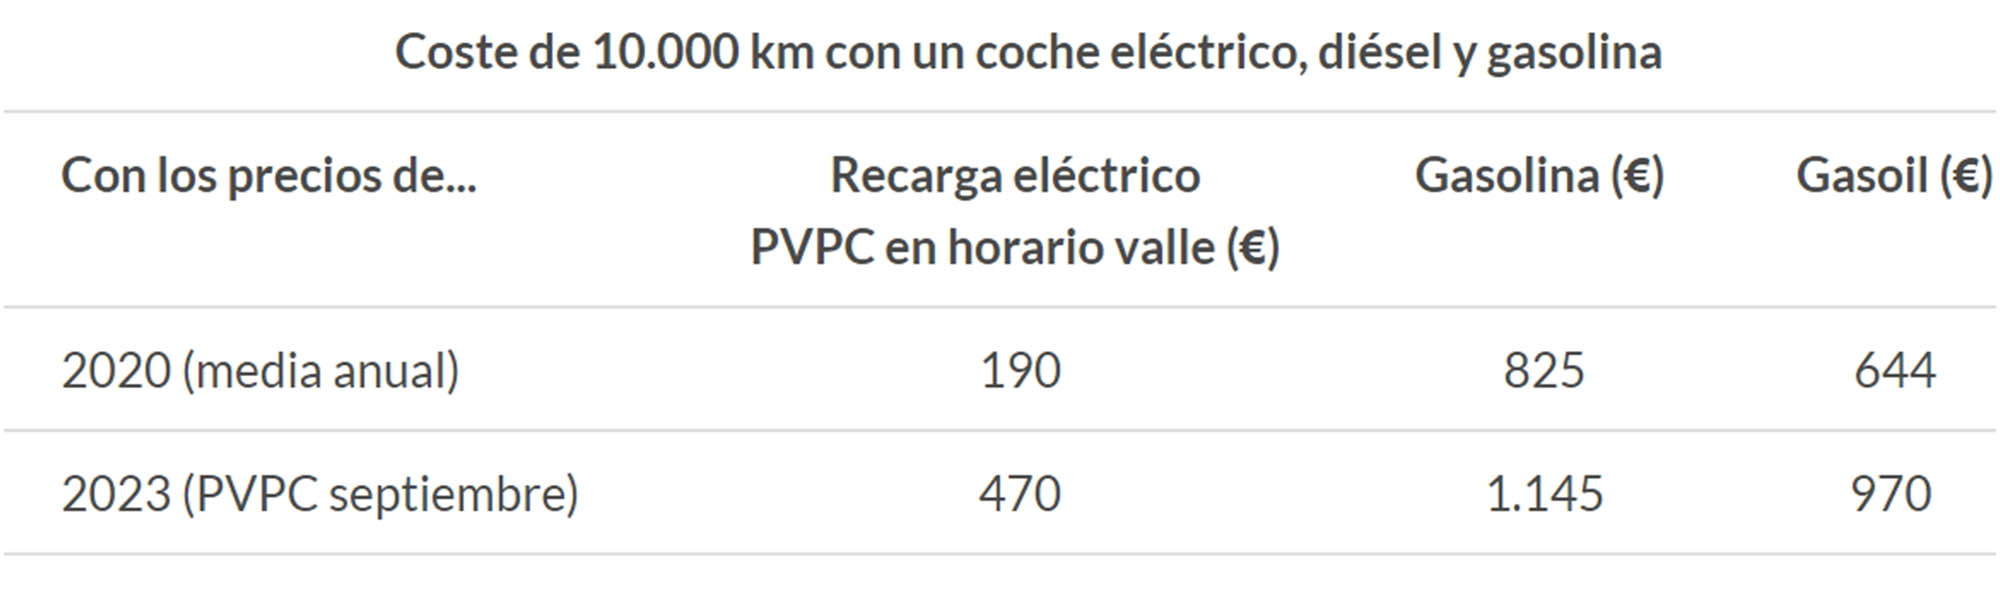 coste comparado coche electrico combsution ocu 2